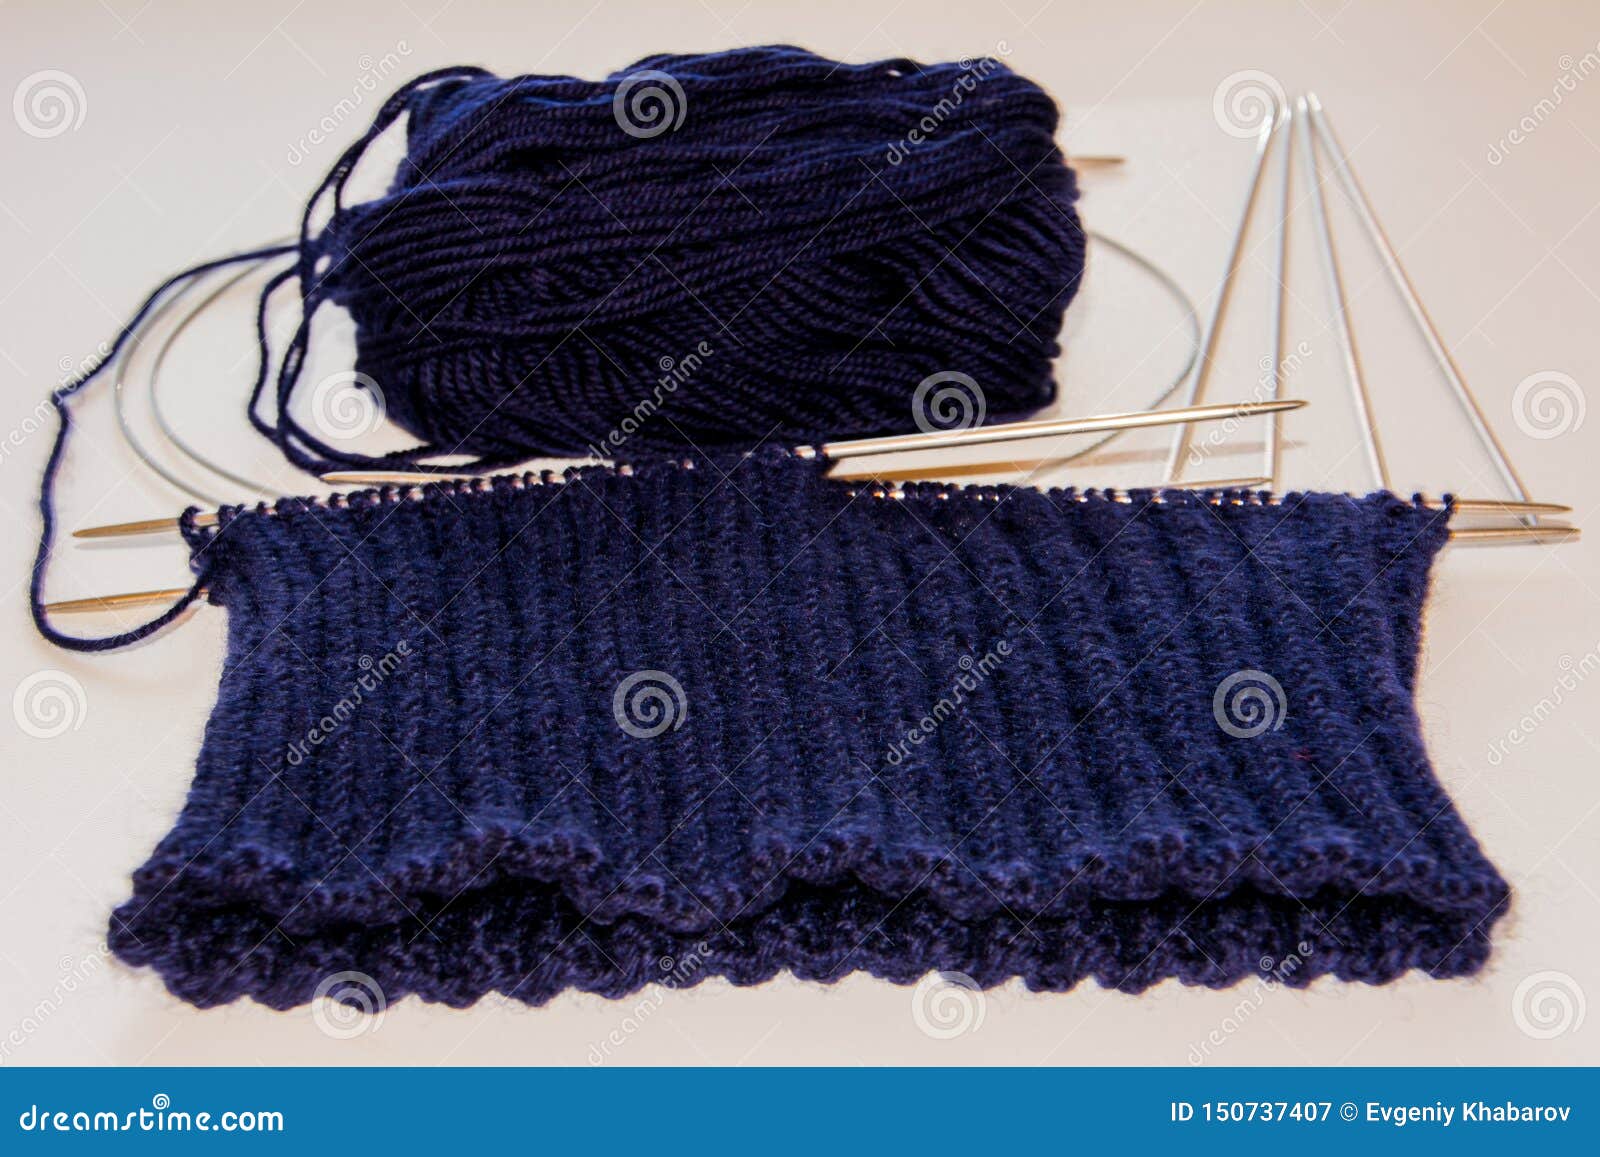 Blue Knitting Wool and Knitting Needles. Stock Image - Image of ...